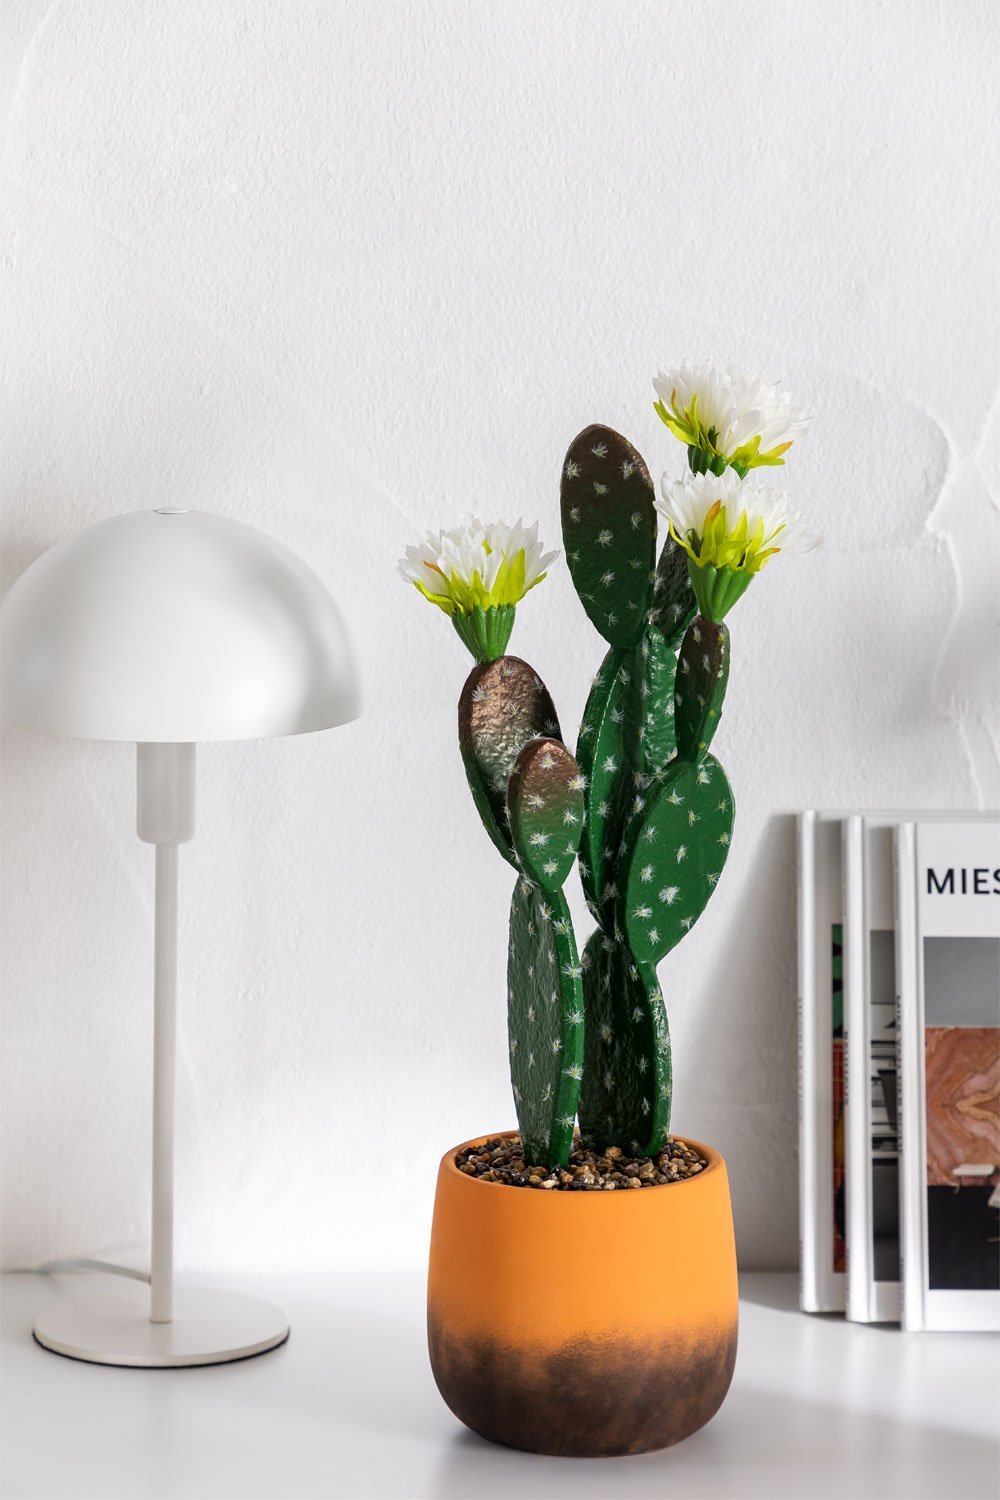 Cactus Artificiale con Fiori Cereus 51 cm, immagine della galleria 1